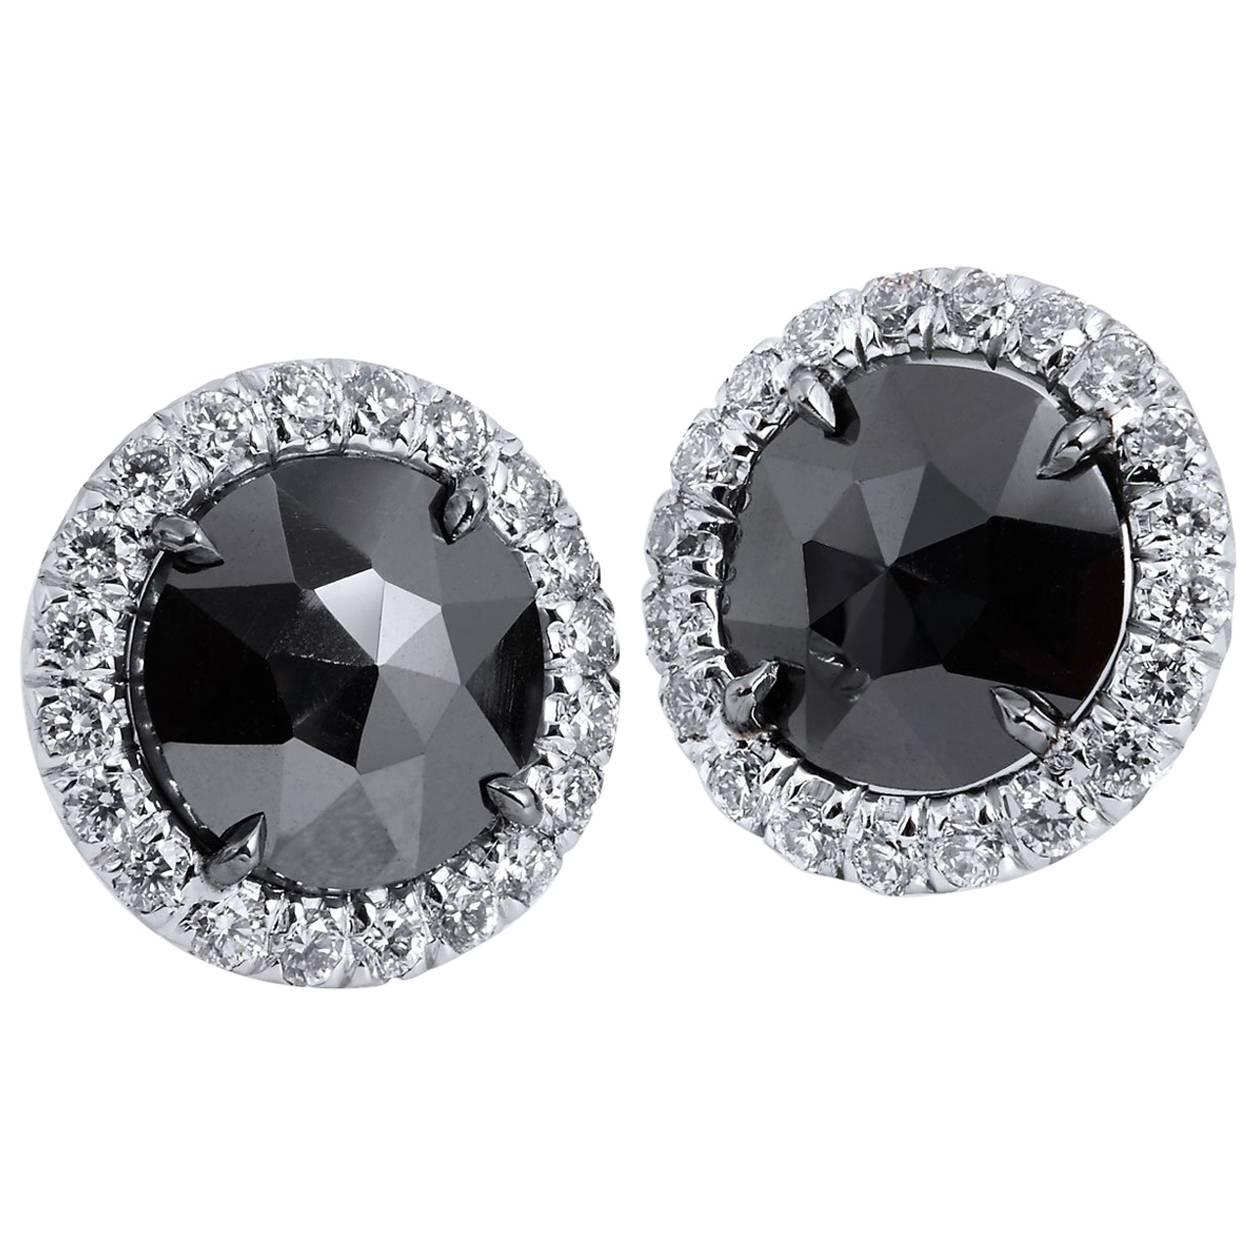 H & H 1.42 Black Diamond Stud Earrings